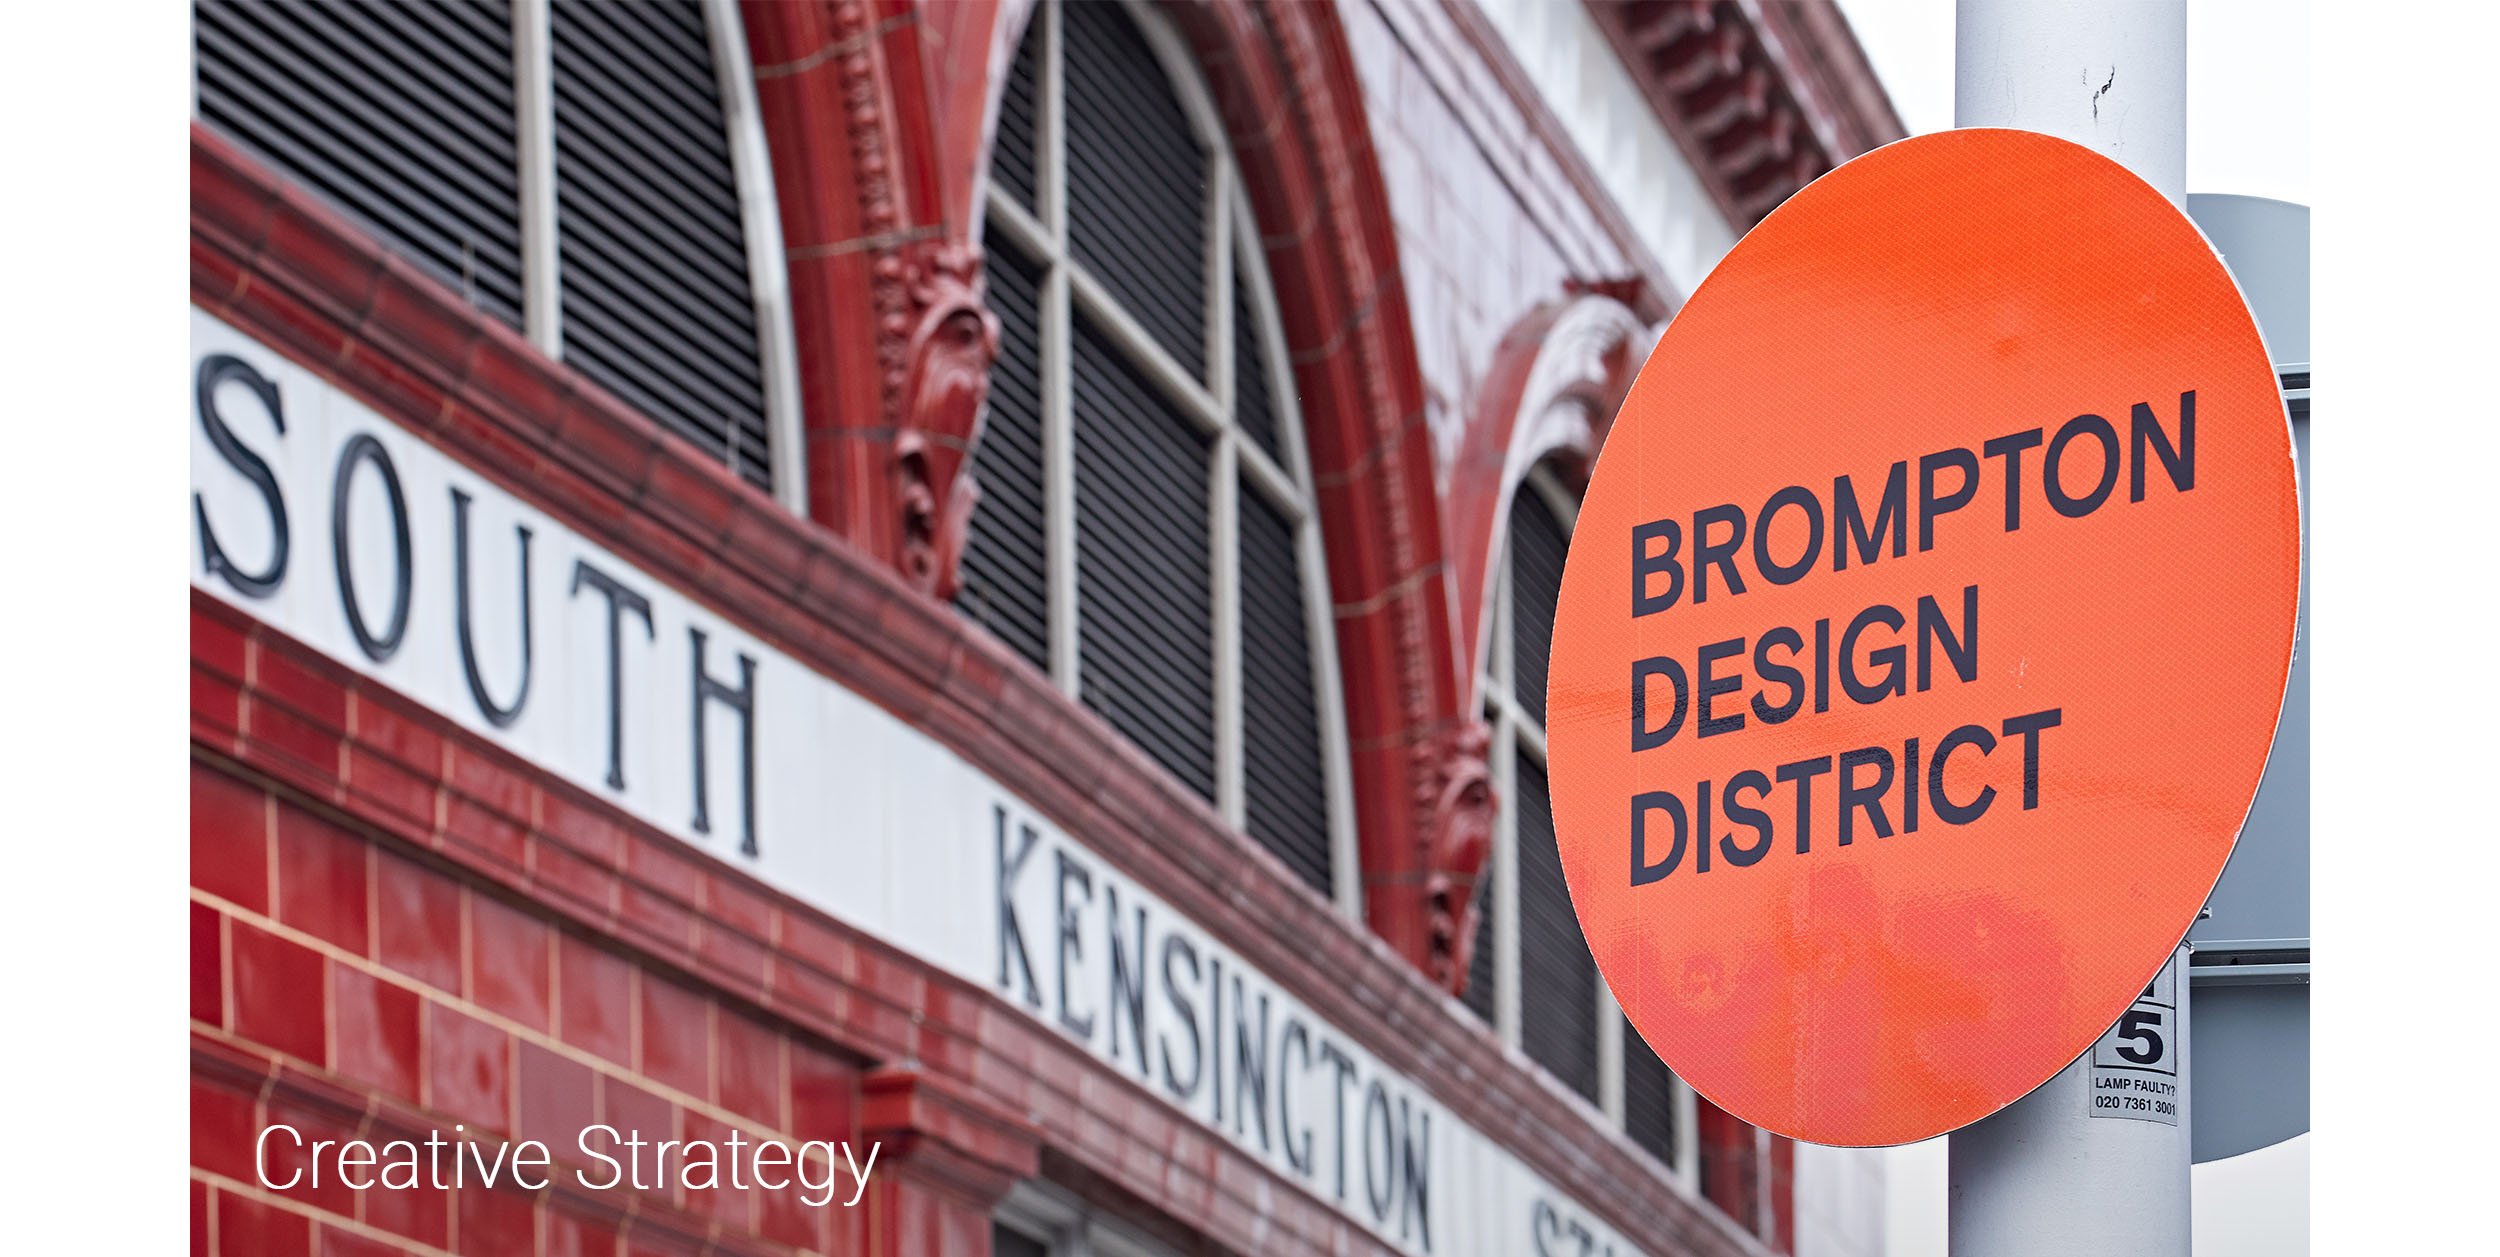 Brompton Design District _ Creative Strategy.jpg